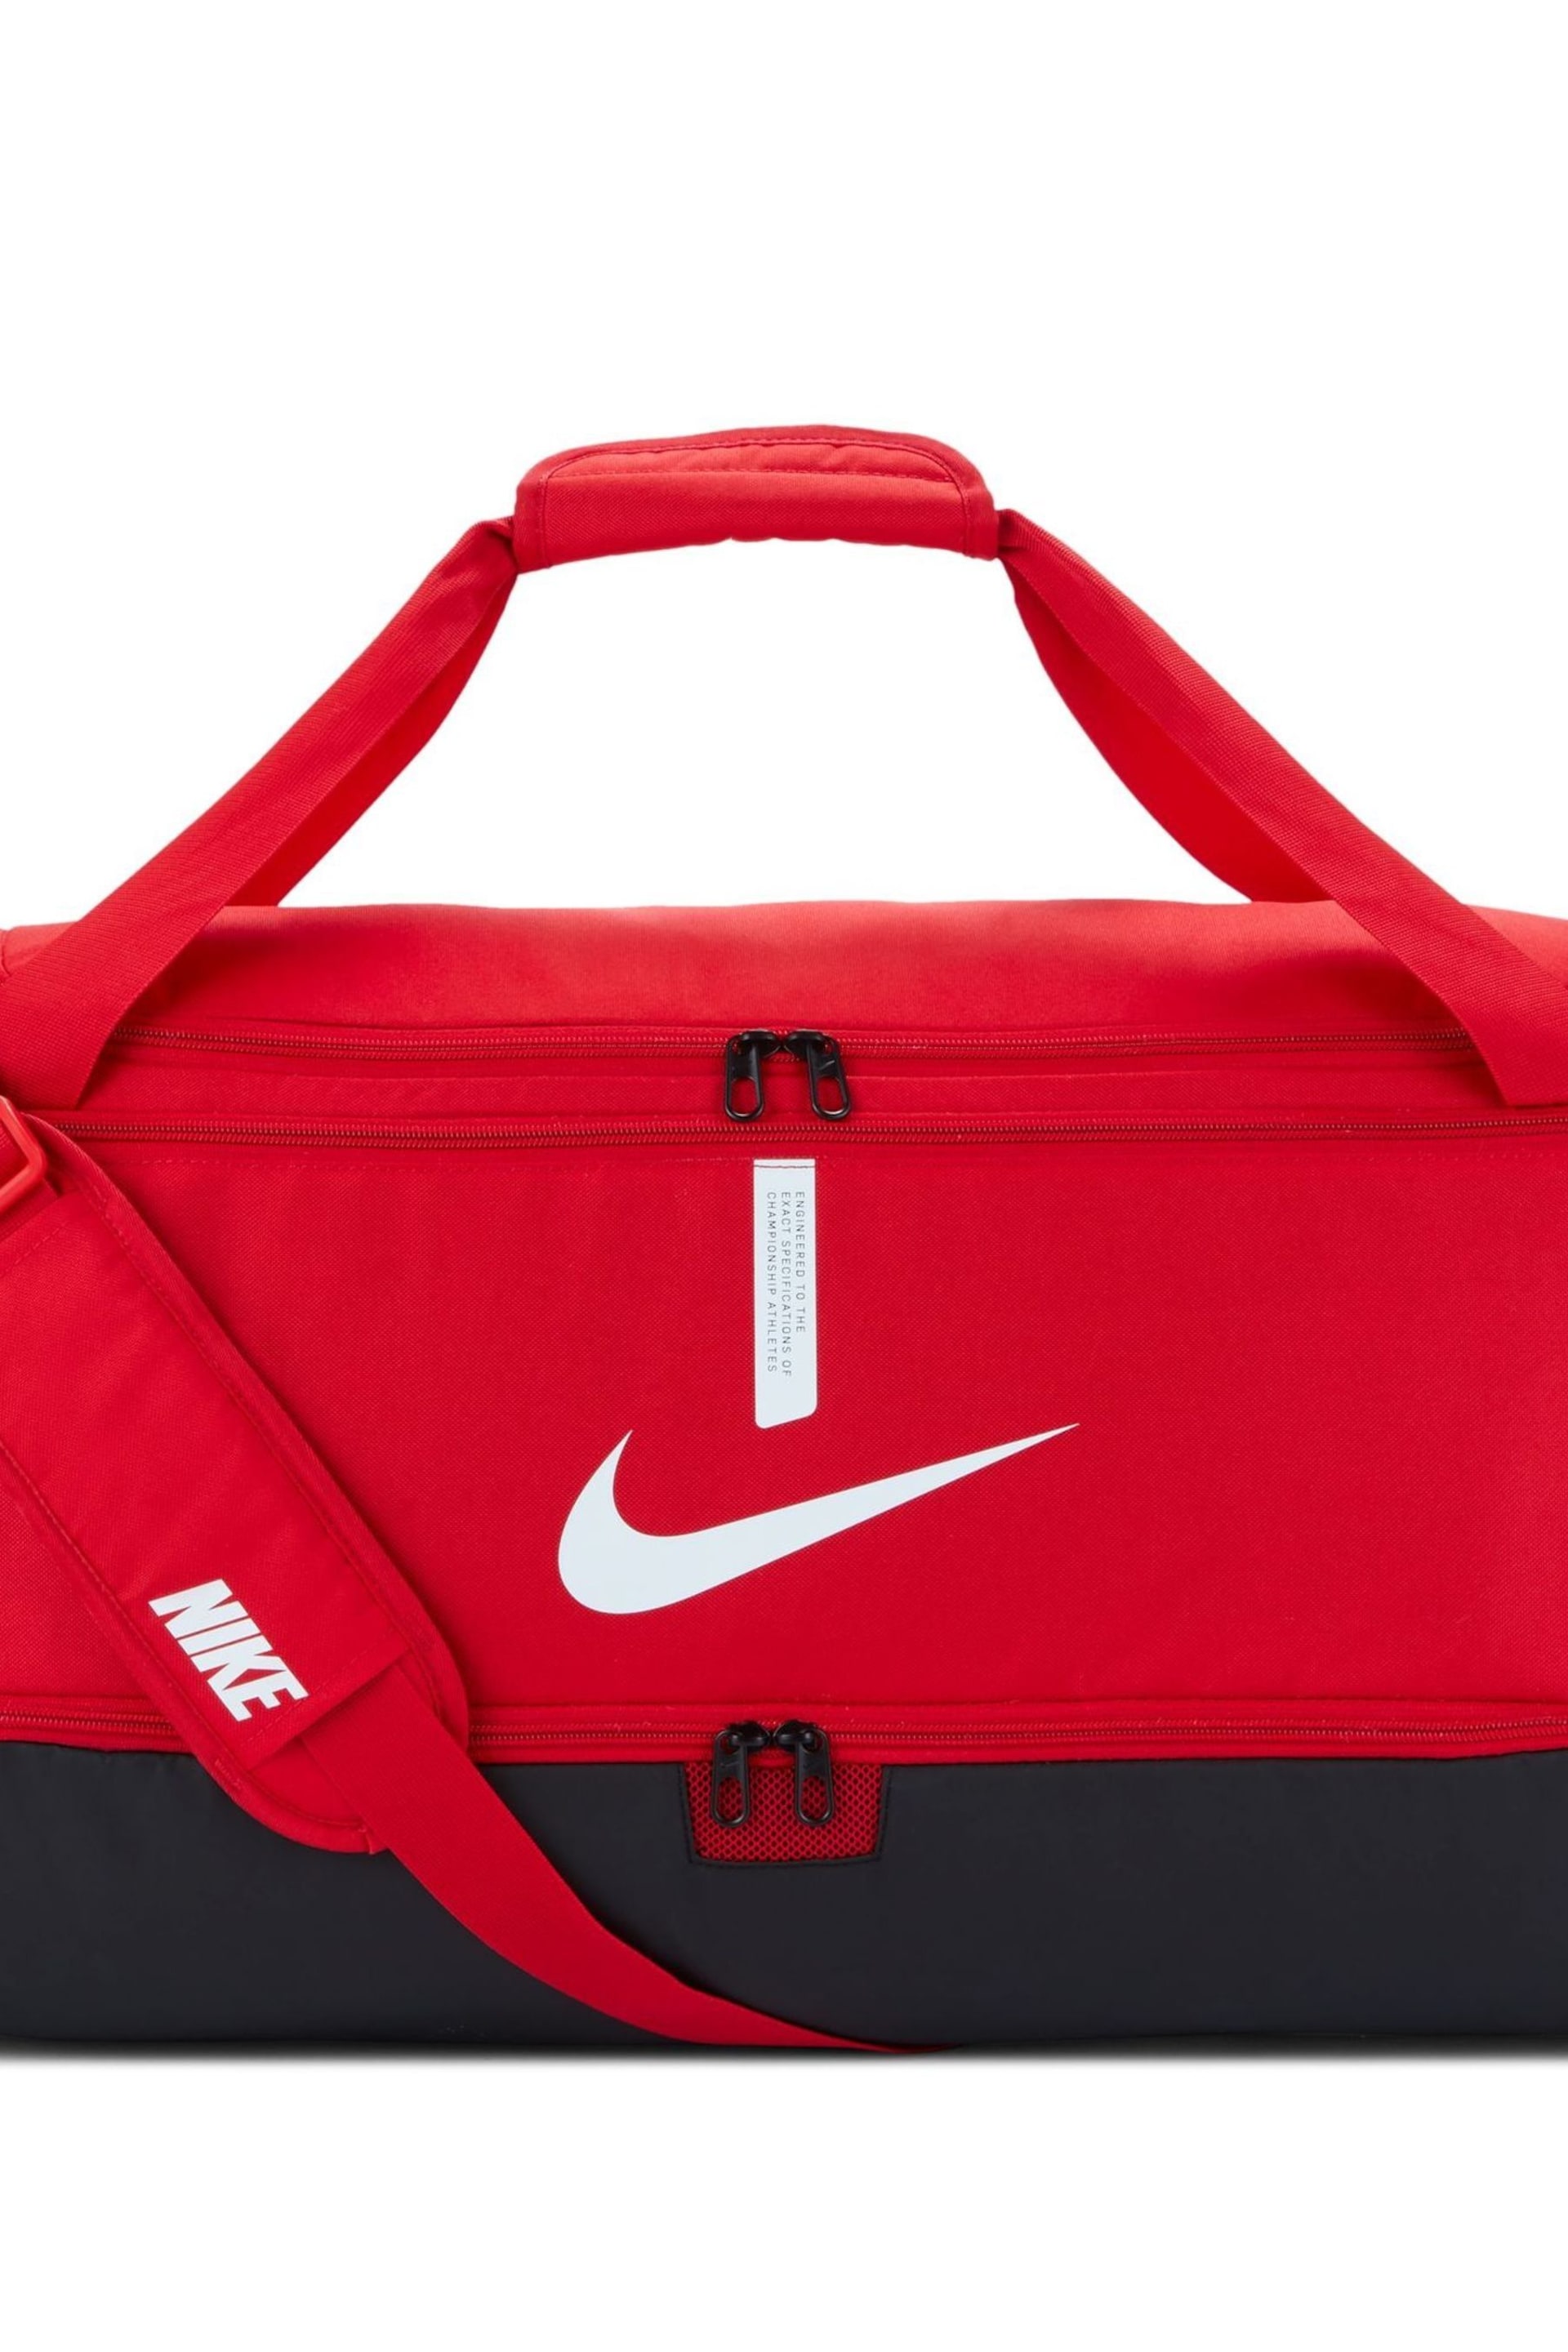 Nike Red Medium Academy Team Football Duffel Bag 60L - Image 8 of 11